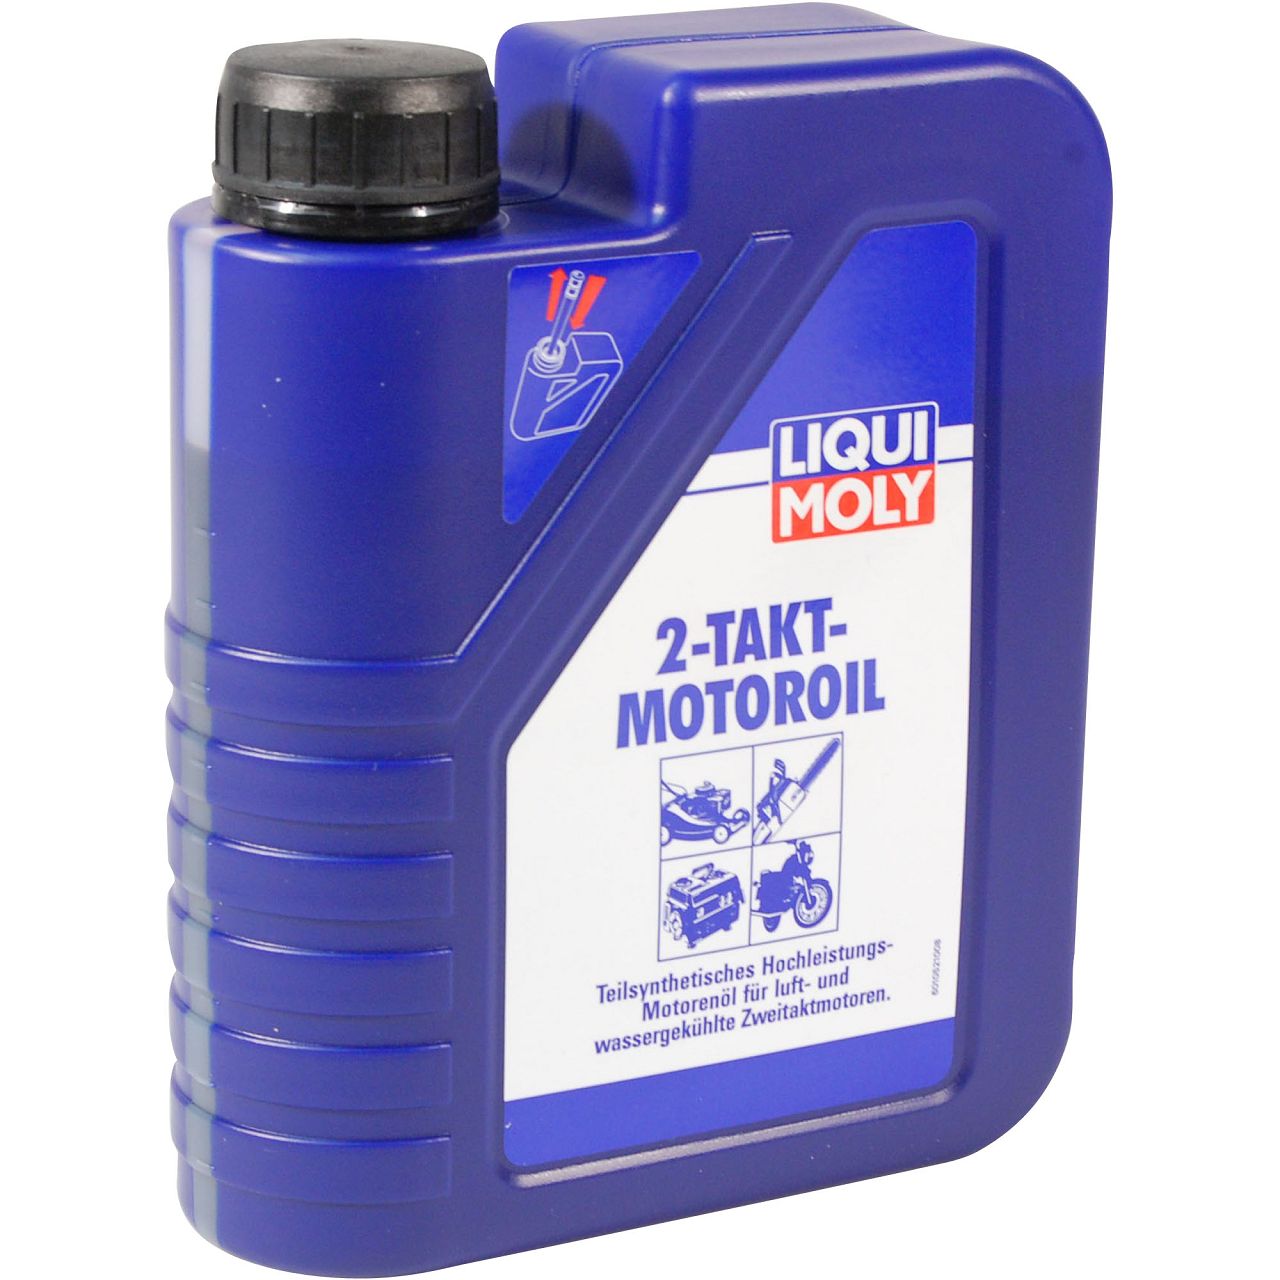 LIQUI MOLY Motoröl Öl 2-Takt-Motoroil selbstmischend 2L 2 Liter 1052